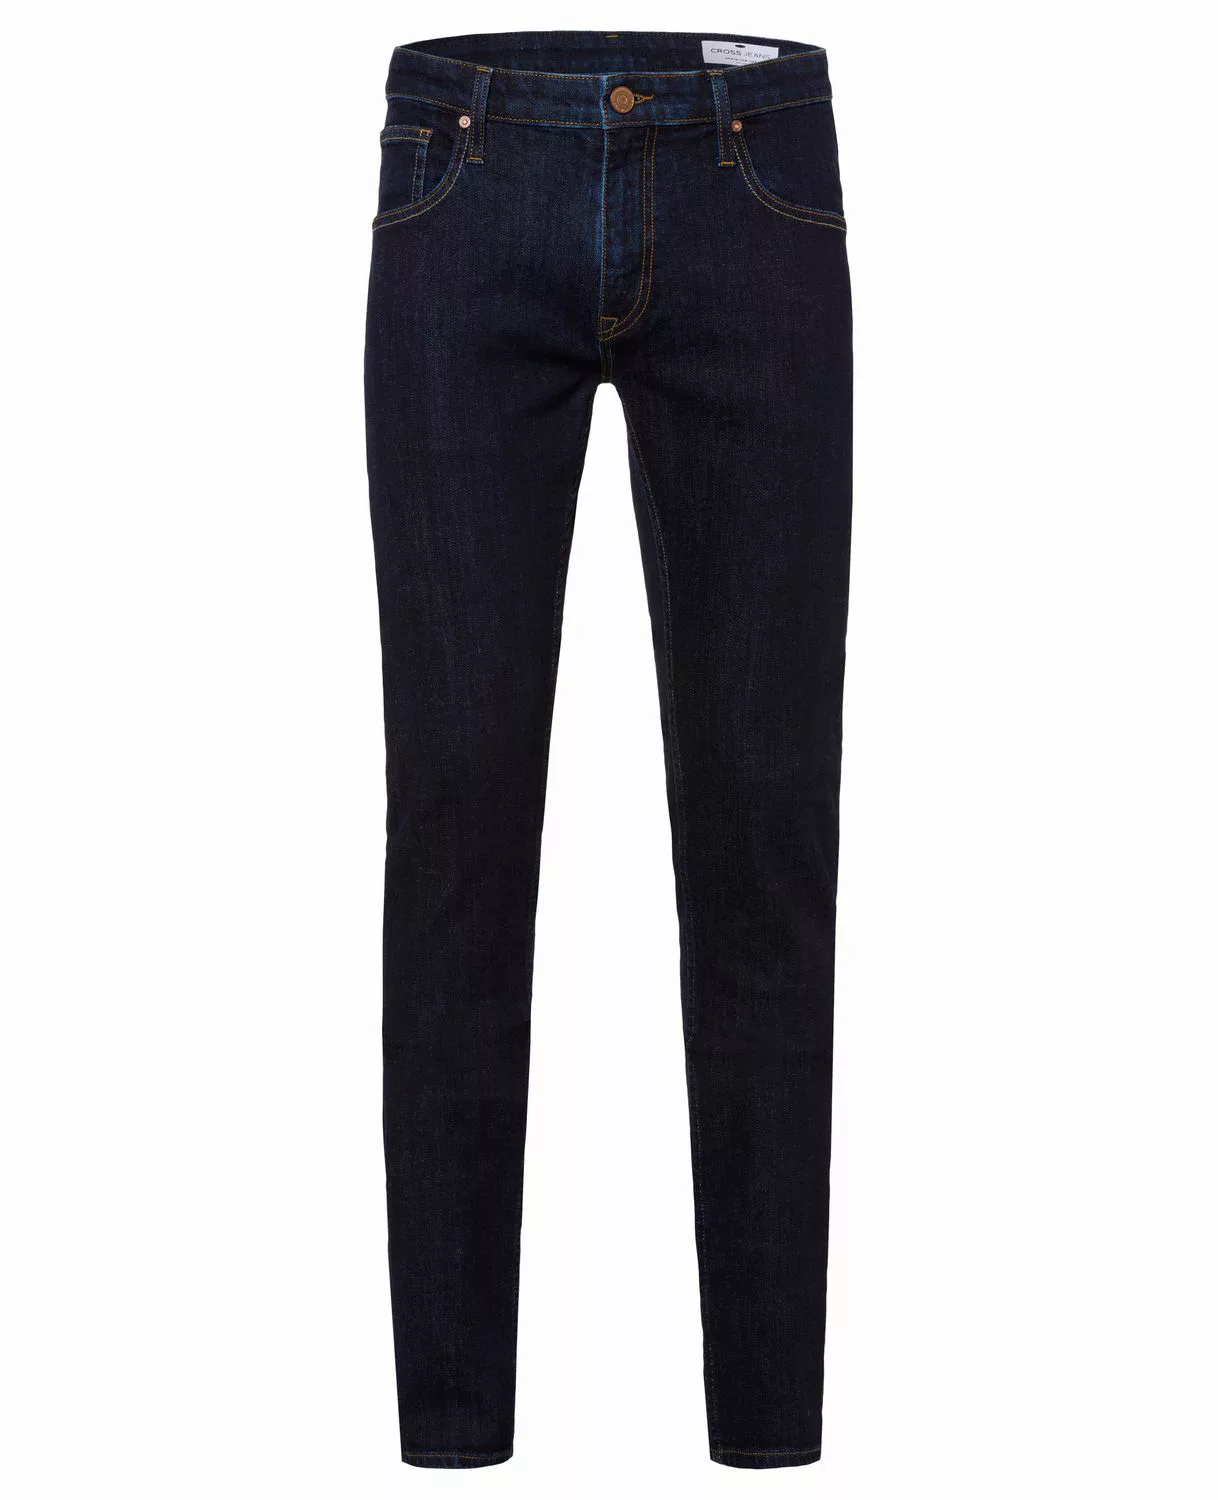 Cross Jeans Herren Jeans Damien - Slim Fit - Blau - Rinsed günstig online kaufen